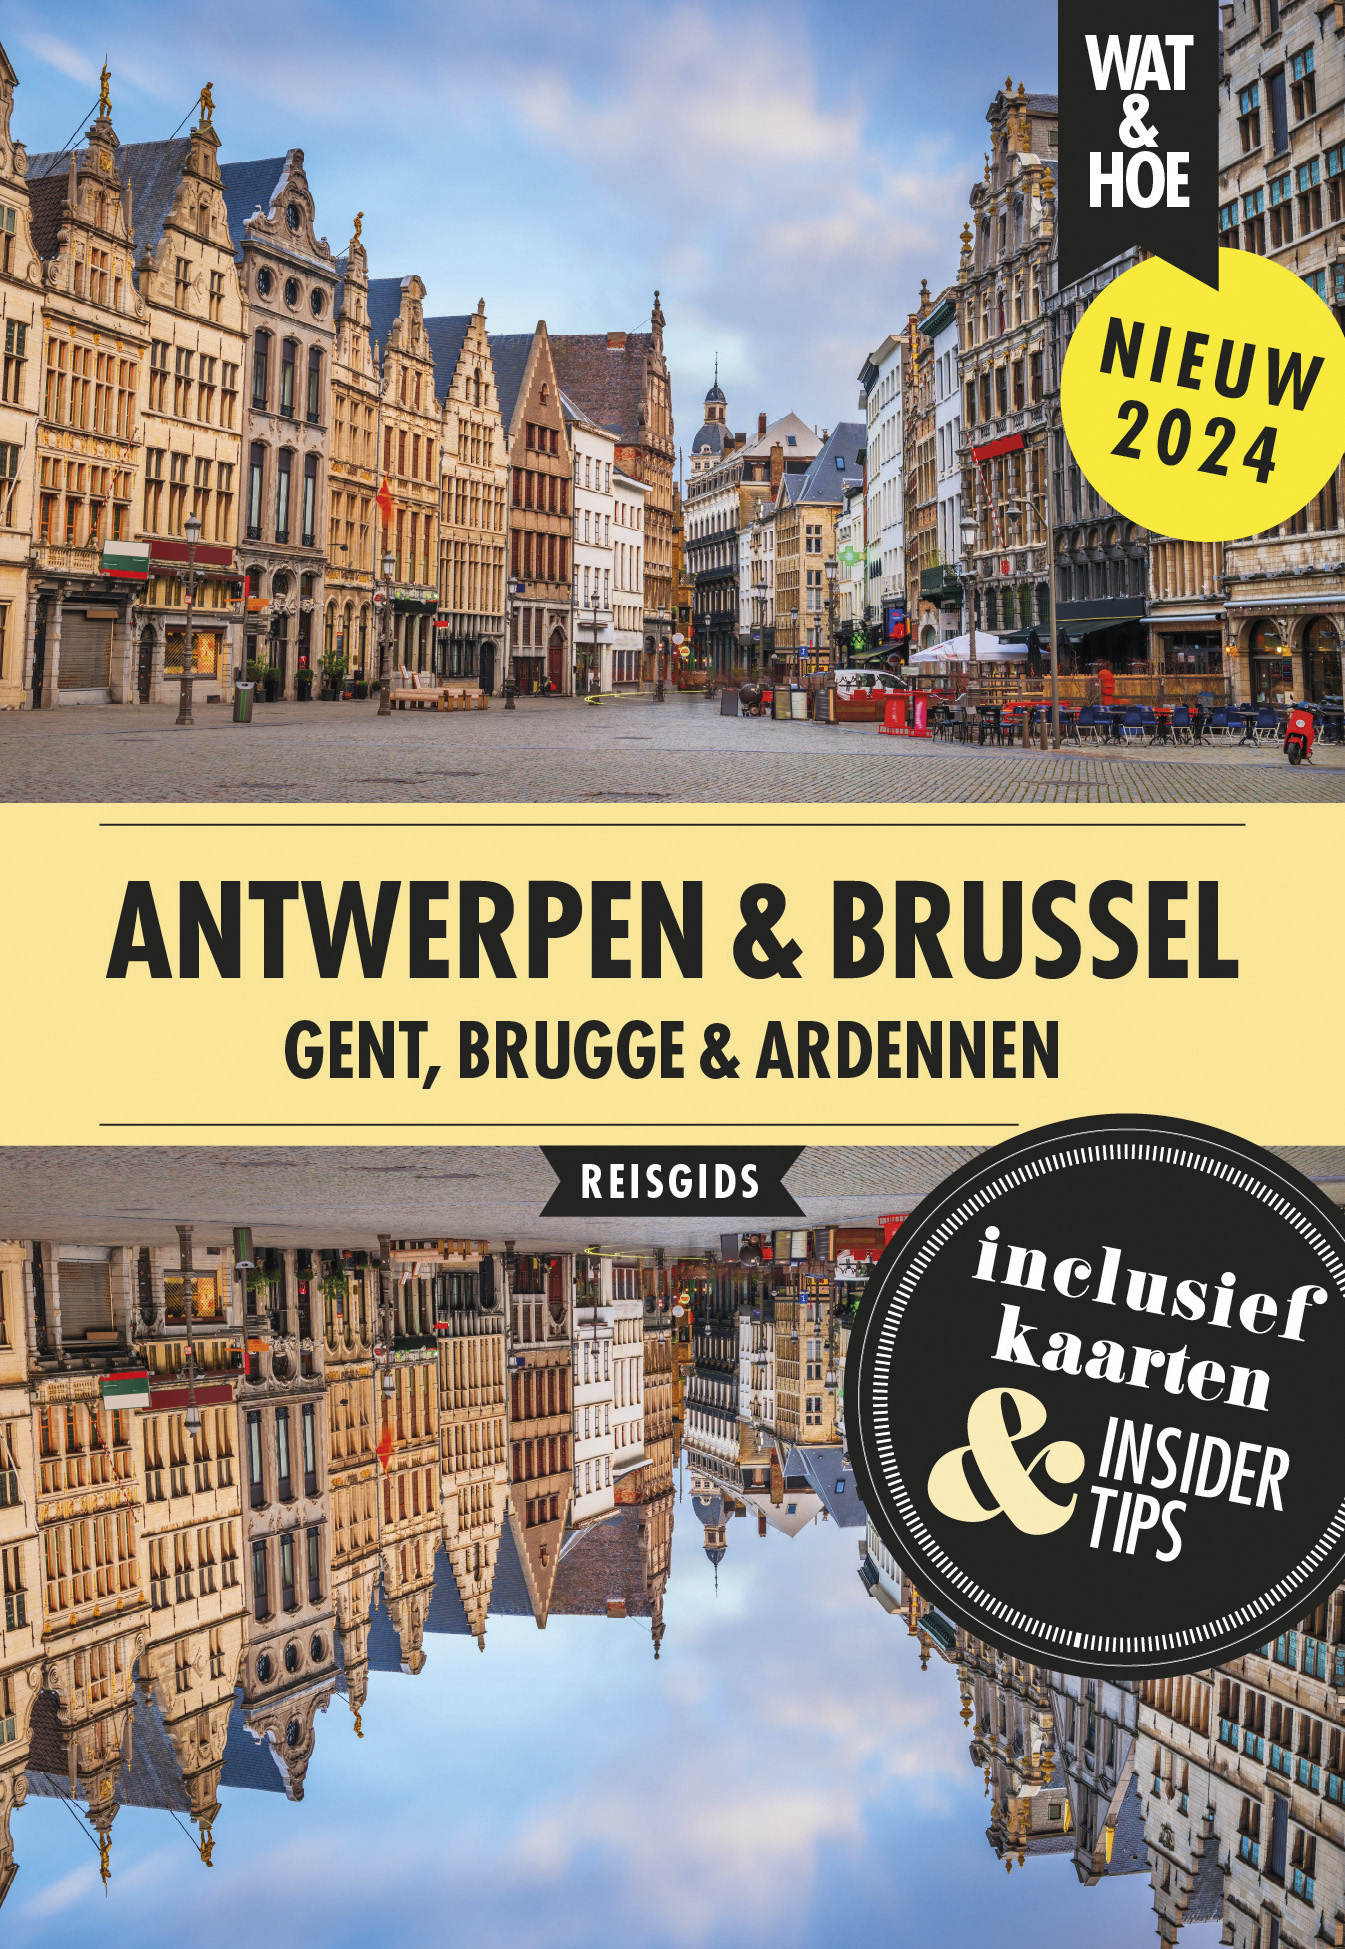 Online bestellen: Reisgids Wat & Hoe Antwerpen, Brussel | Kosmos Uitgevers